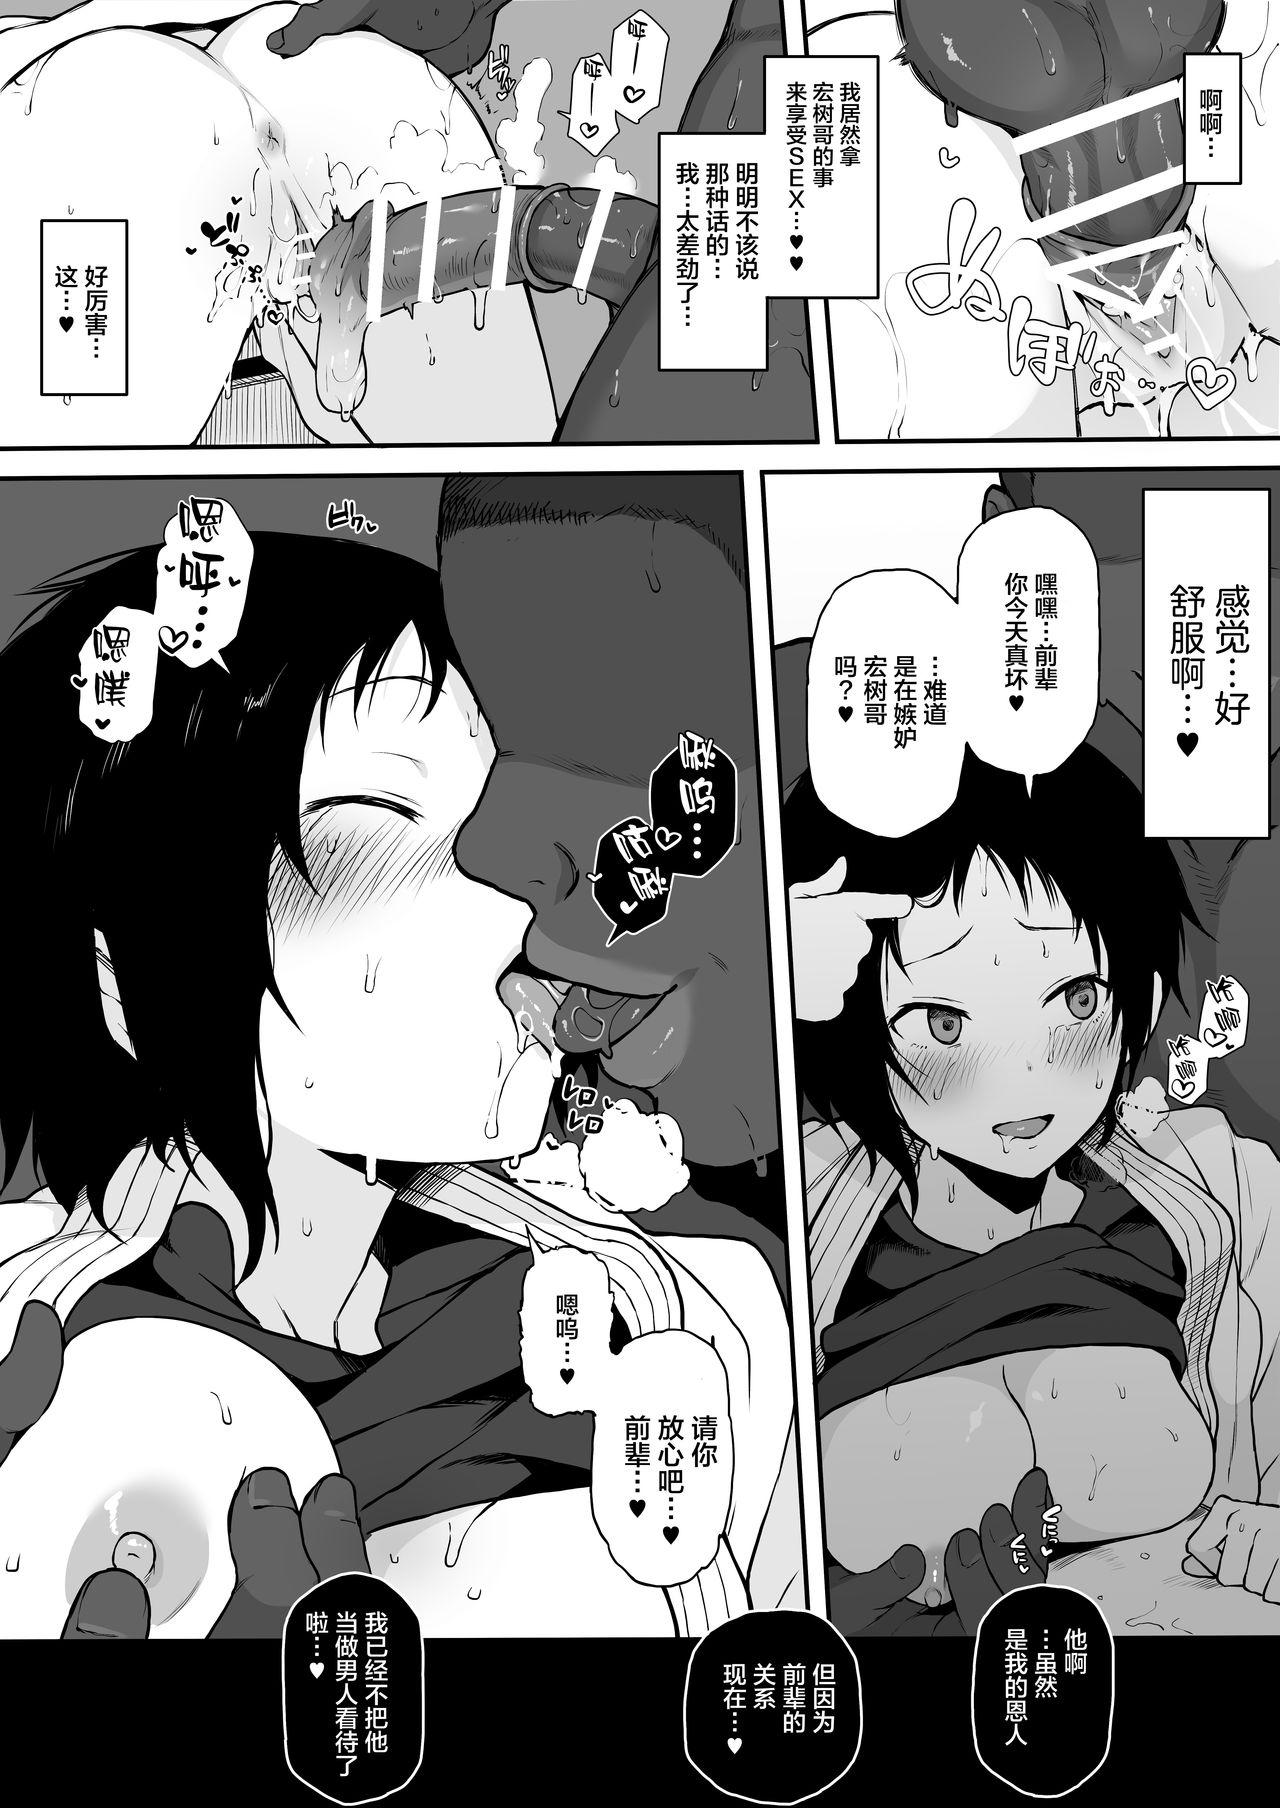 Kokujin no Tenkousei NTR ru Chapters 1-6 part 1 Plus Bonus chapter: Stolen Mother’s Breasts 51